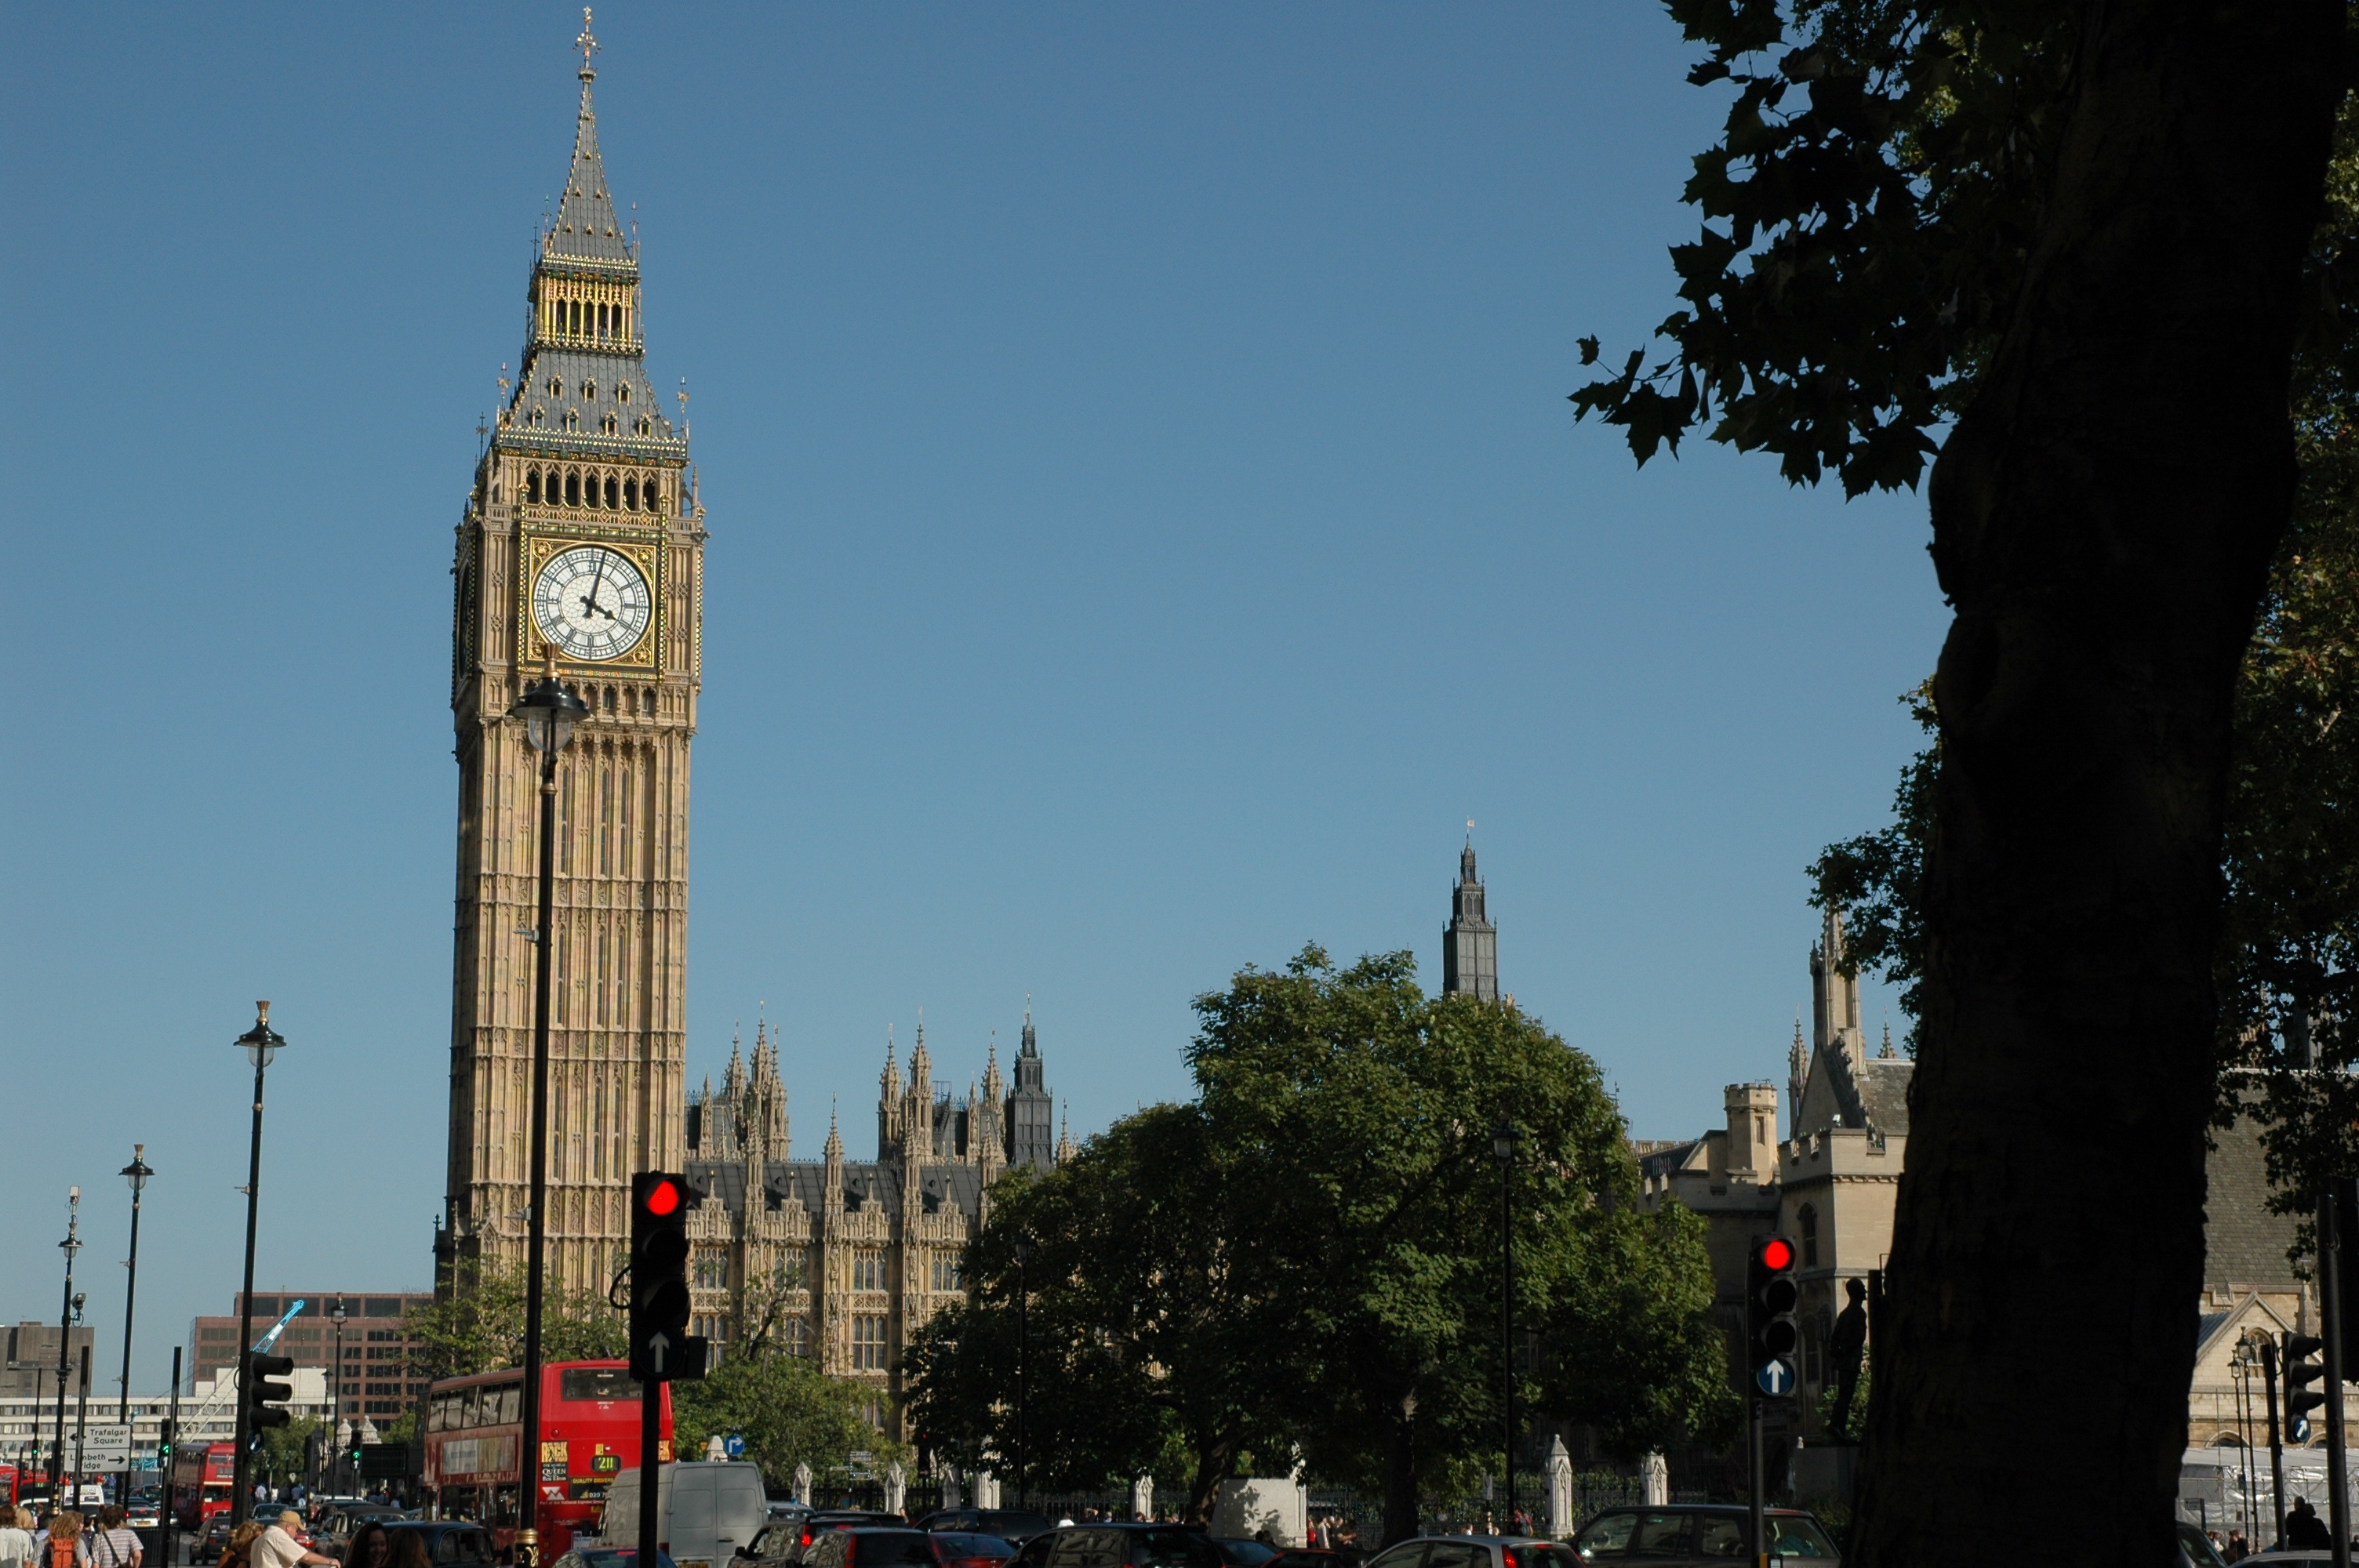 File:The Clock Tower (Big Ben).jpg - Wikimedia Commons